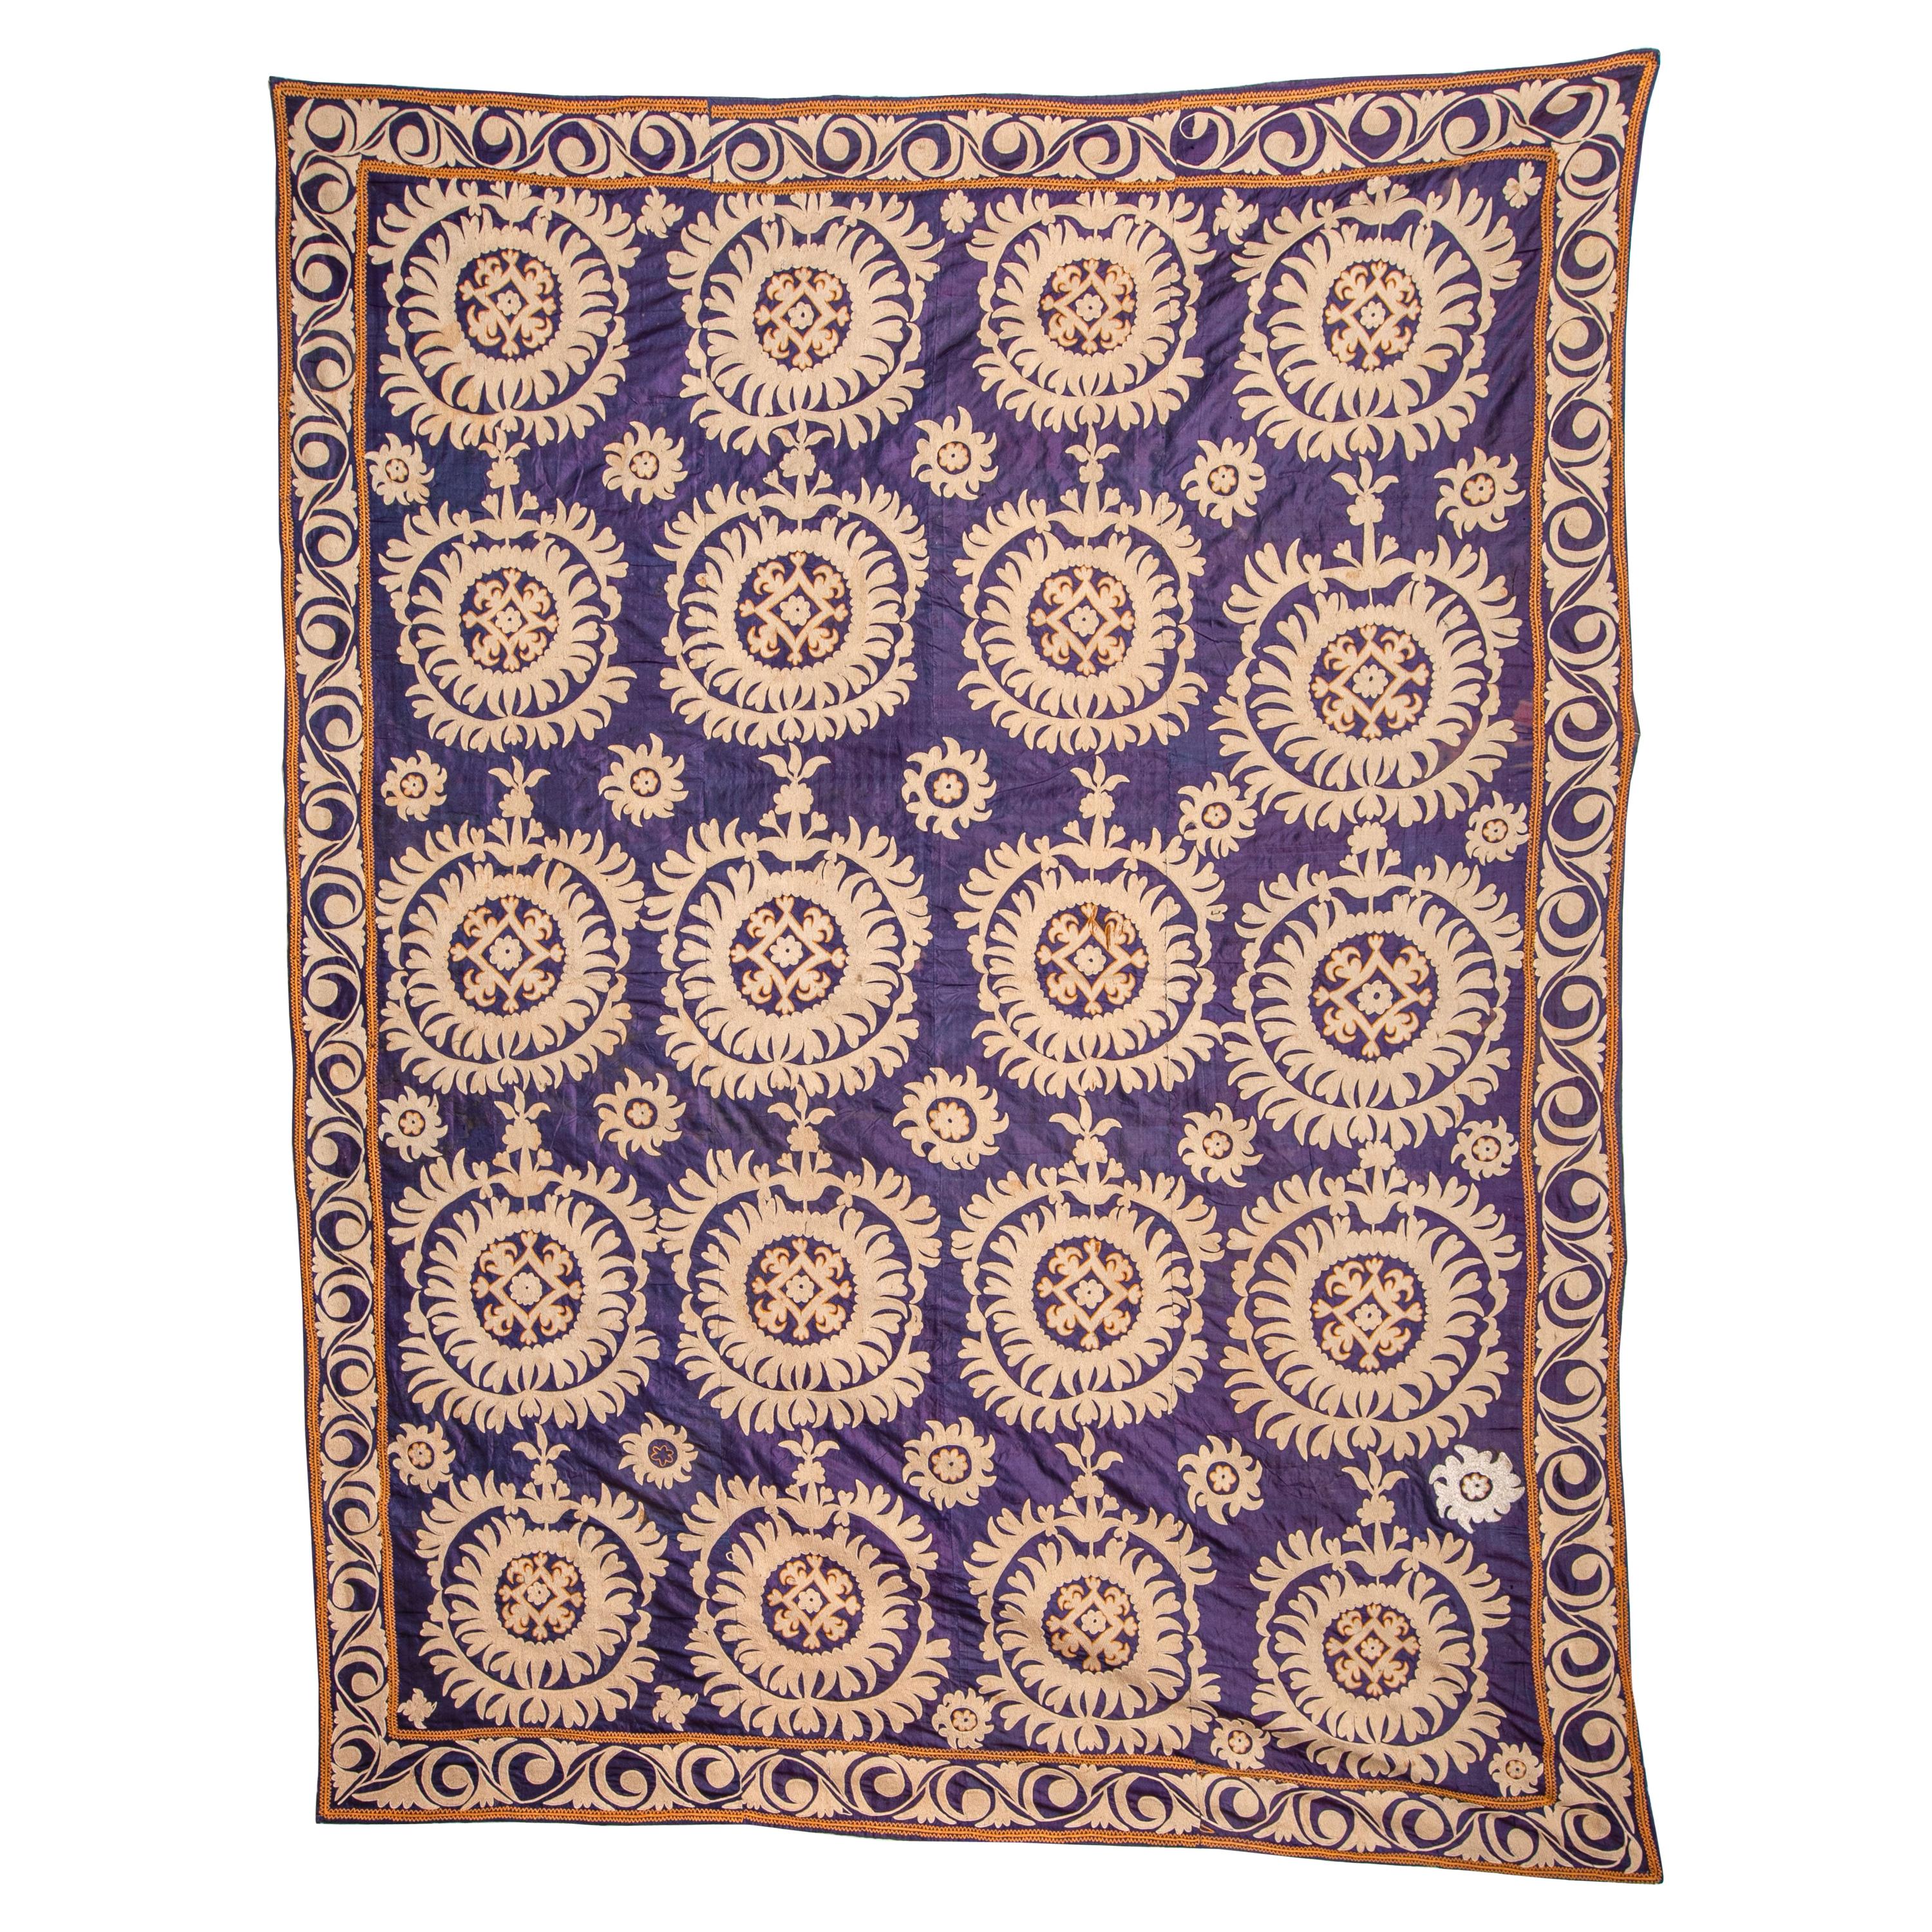 Antique Silk Background Suzani from Samarkand, Uzbekistan, Early 20th C.